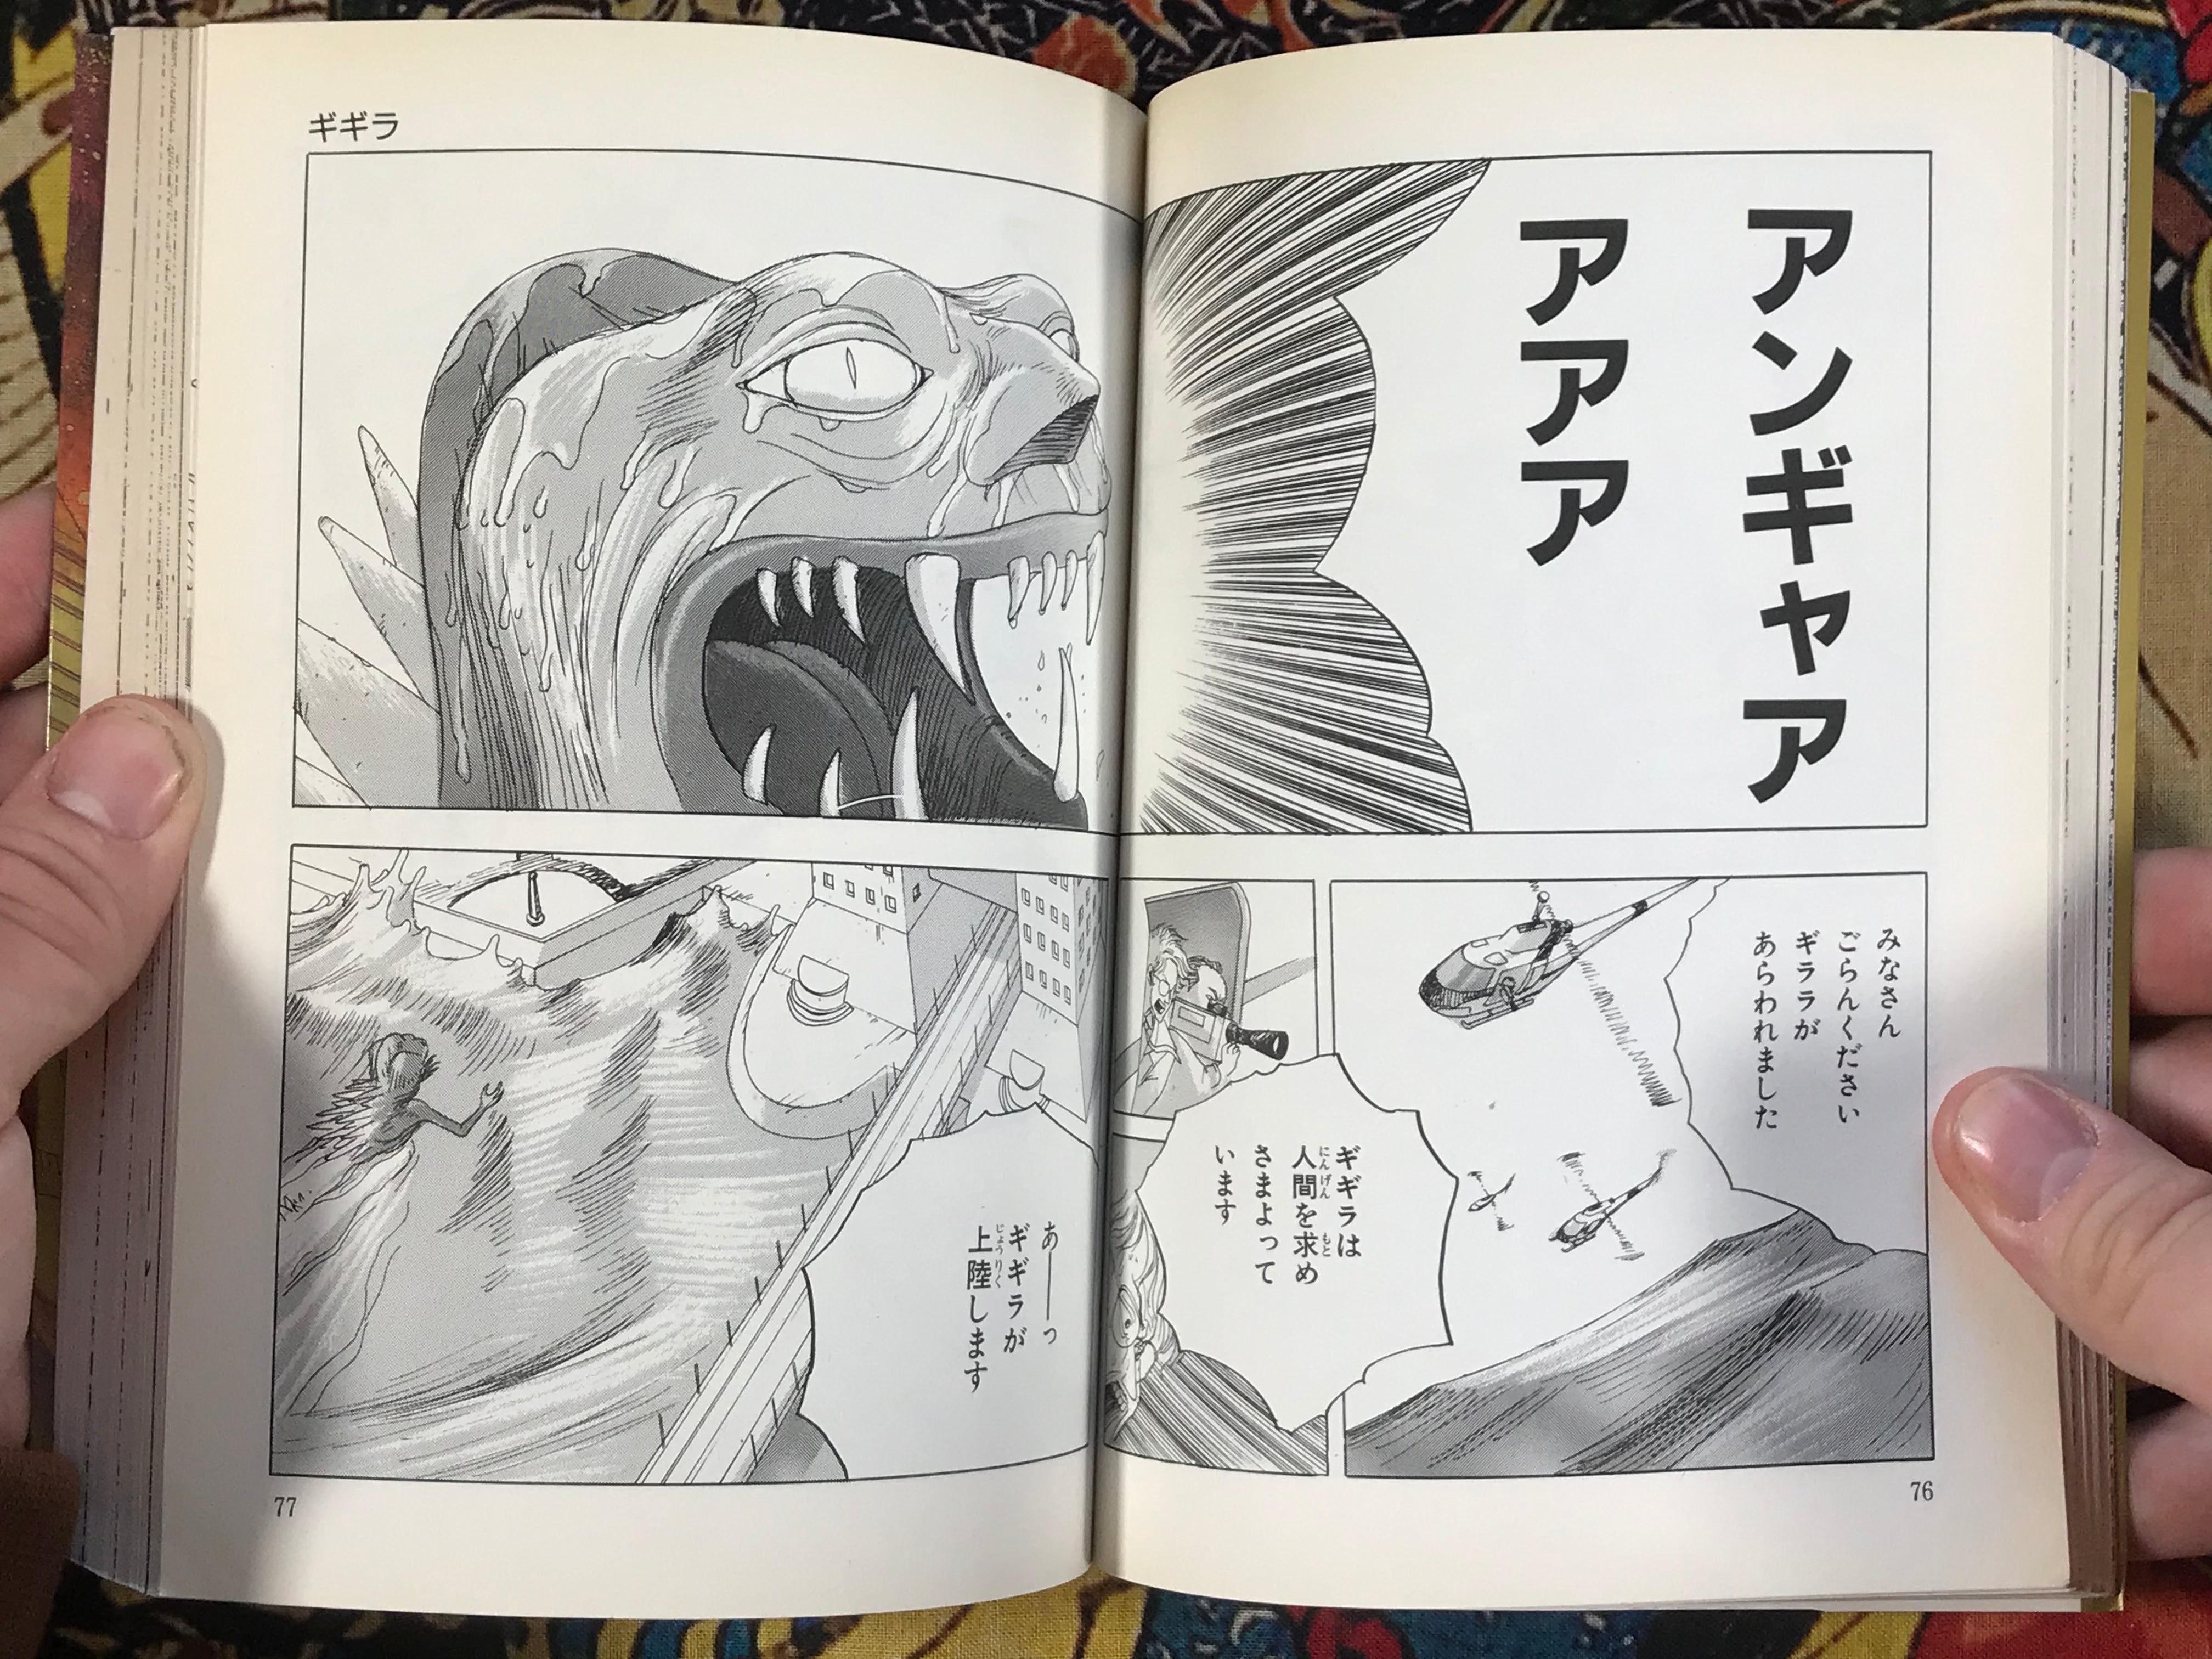 The Gigila by Ochazuke Nori (1991)